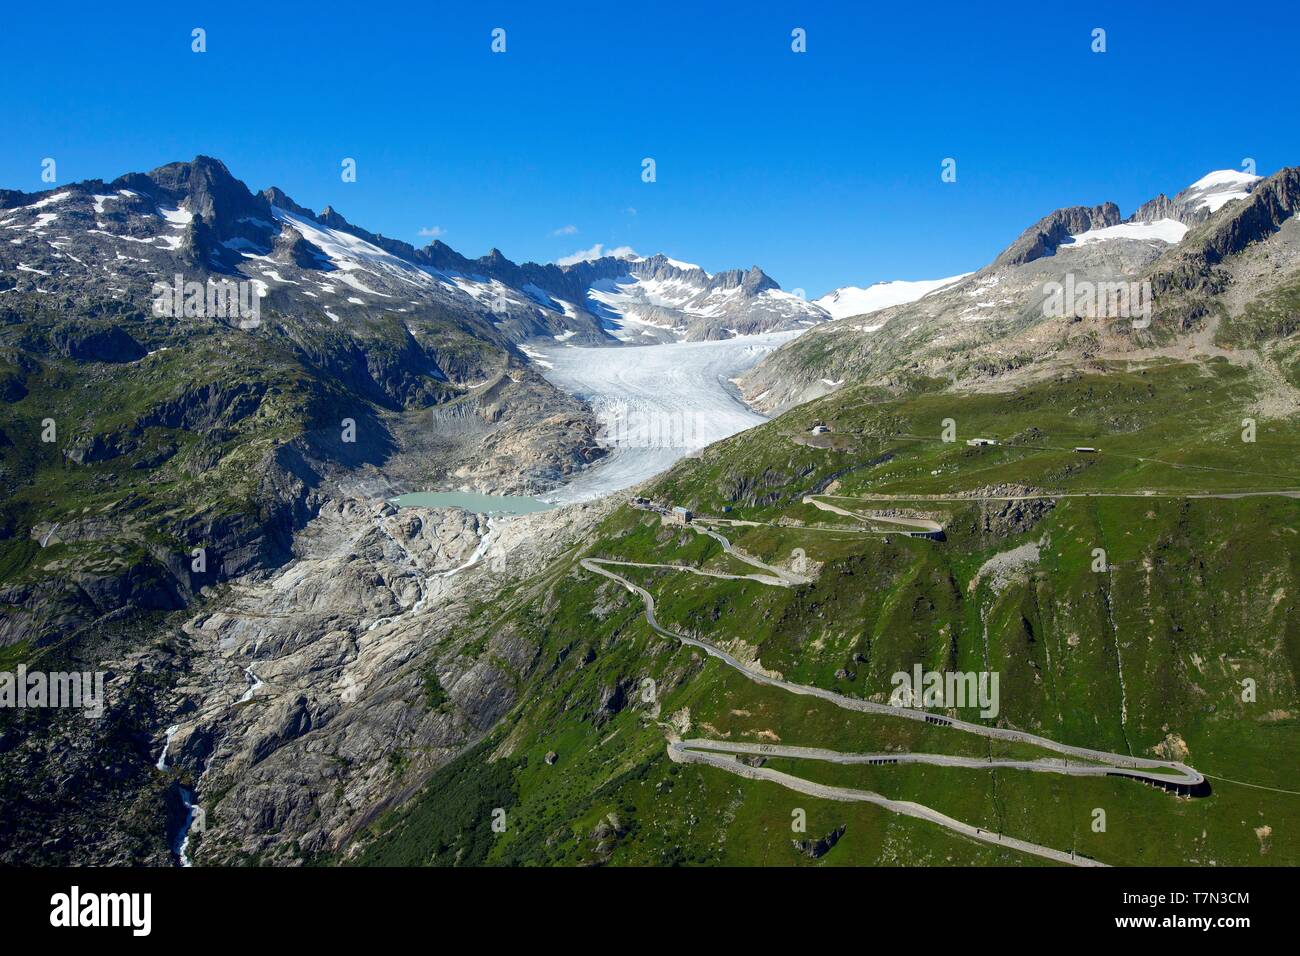 La Svizzera nel canton Vallese, Furka Pass, ghiacciaio del Rodano, Les Sources du Rhône, Hotel Belvédère Foto Stock